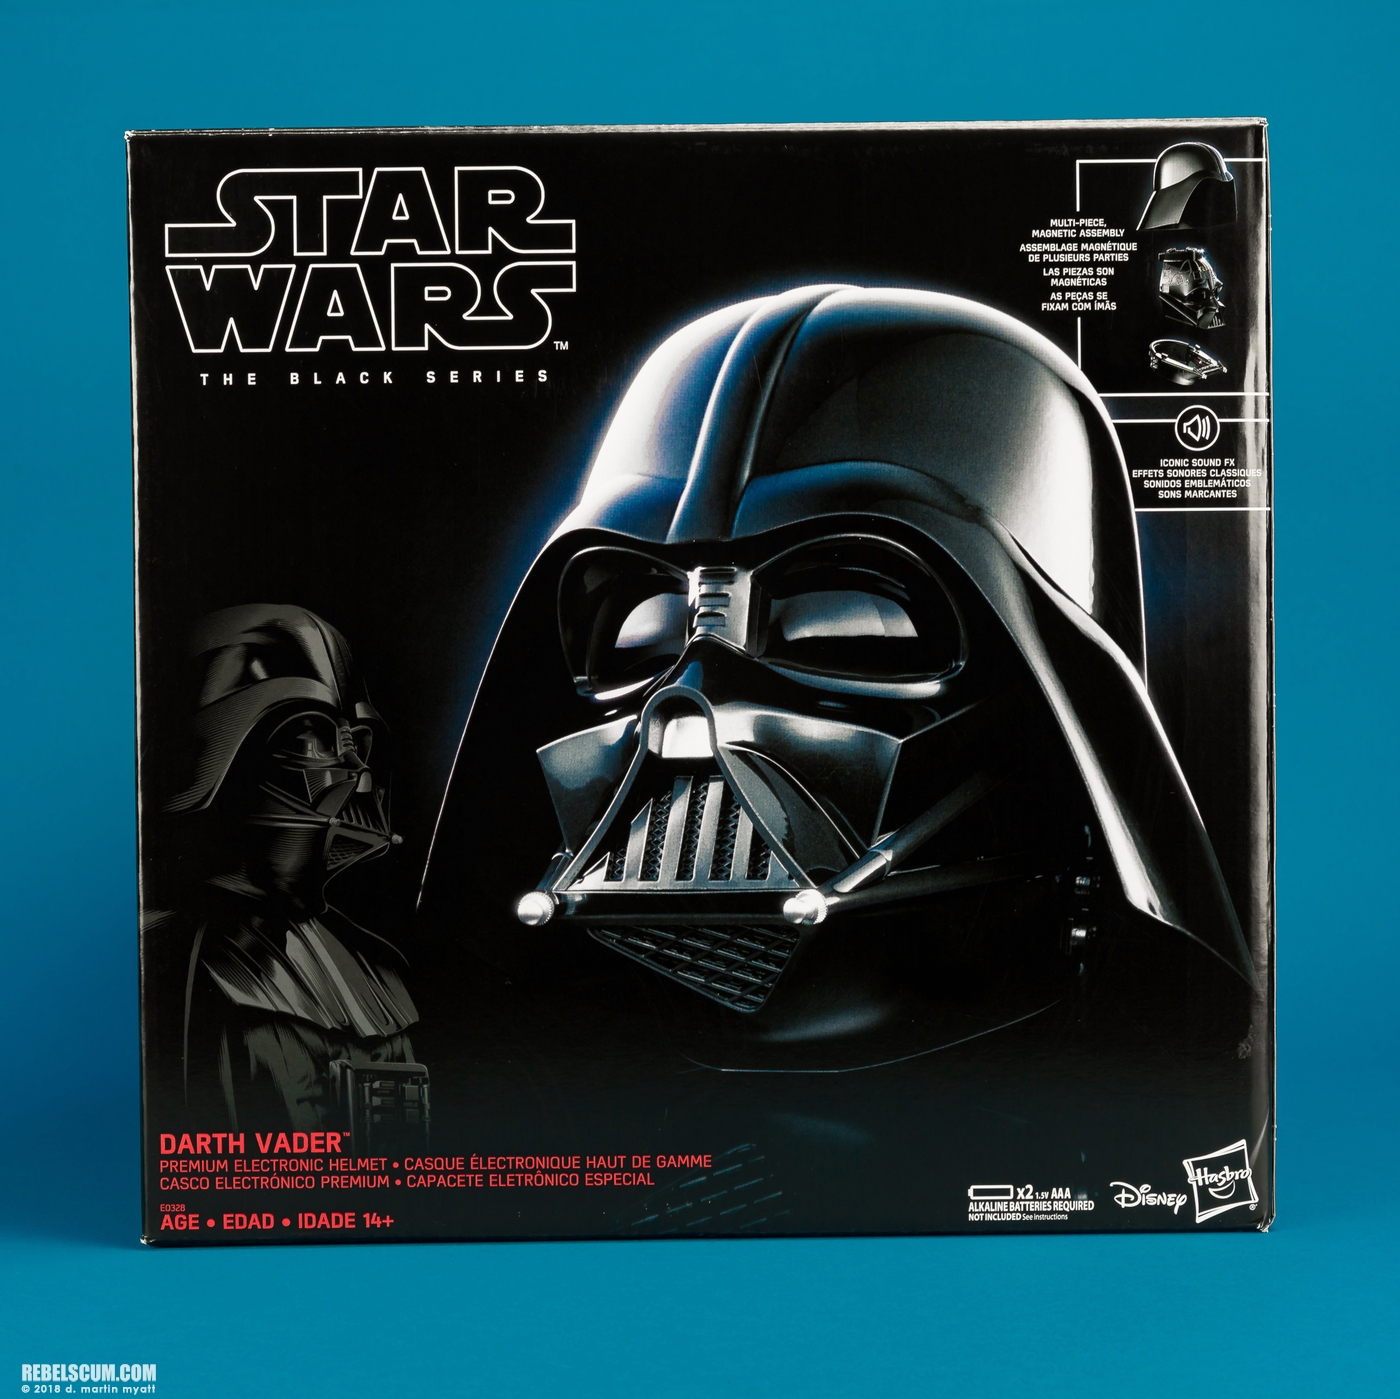 Darth-Vader-Premium-Electronic-Helmet-The-Black-Series-020.jpg